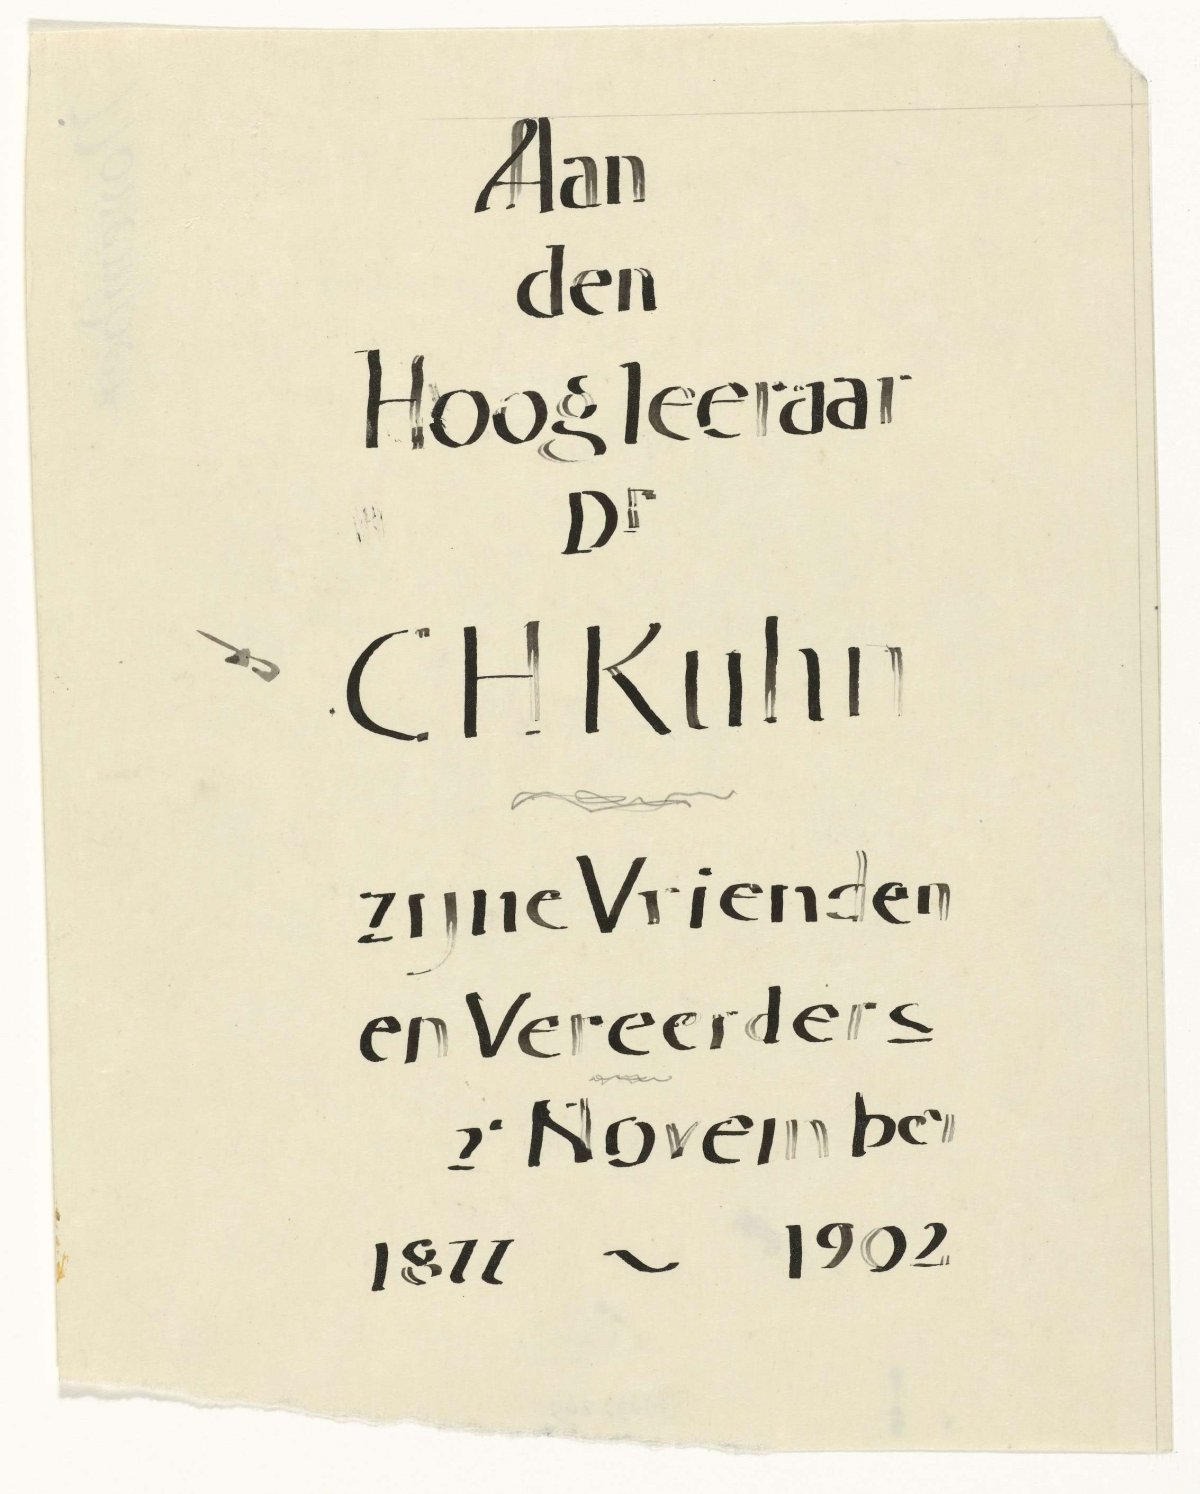 Text on the occasion of Prof. Dr. C.H. Kuhn's 25th anniversary., Gerrit Willem Dijsselhof, 1876 - 1924